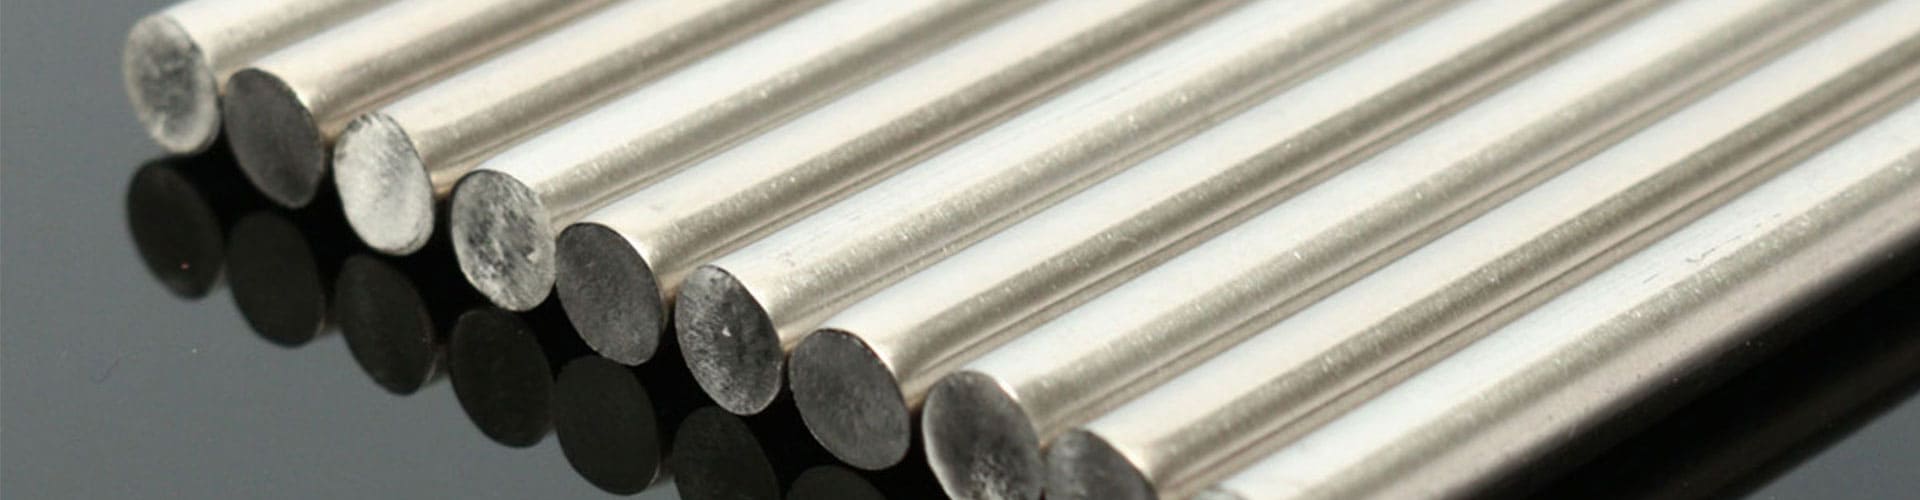 nickel-alloy-201-round-bars-rods-manufacturer-exporter-supplier-in-united-kingdom